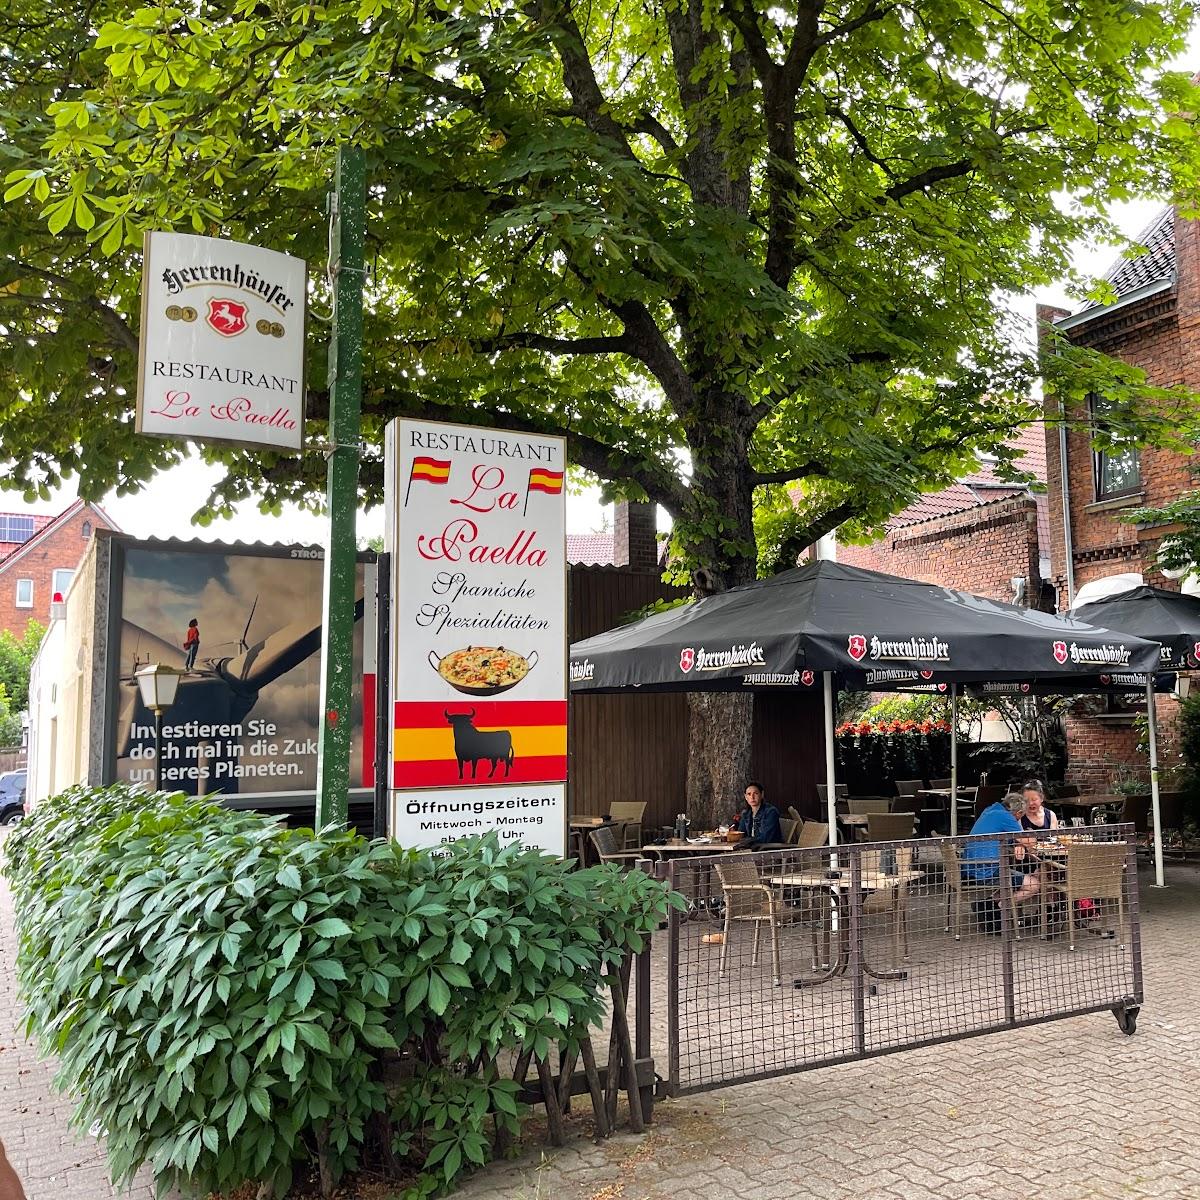 Restaurant "La Paella" in Hannover